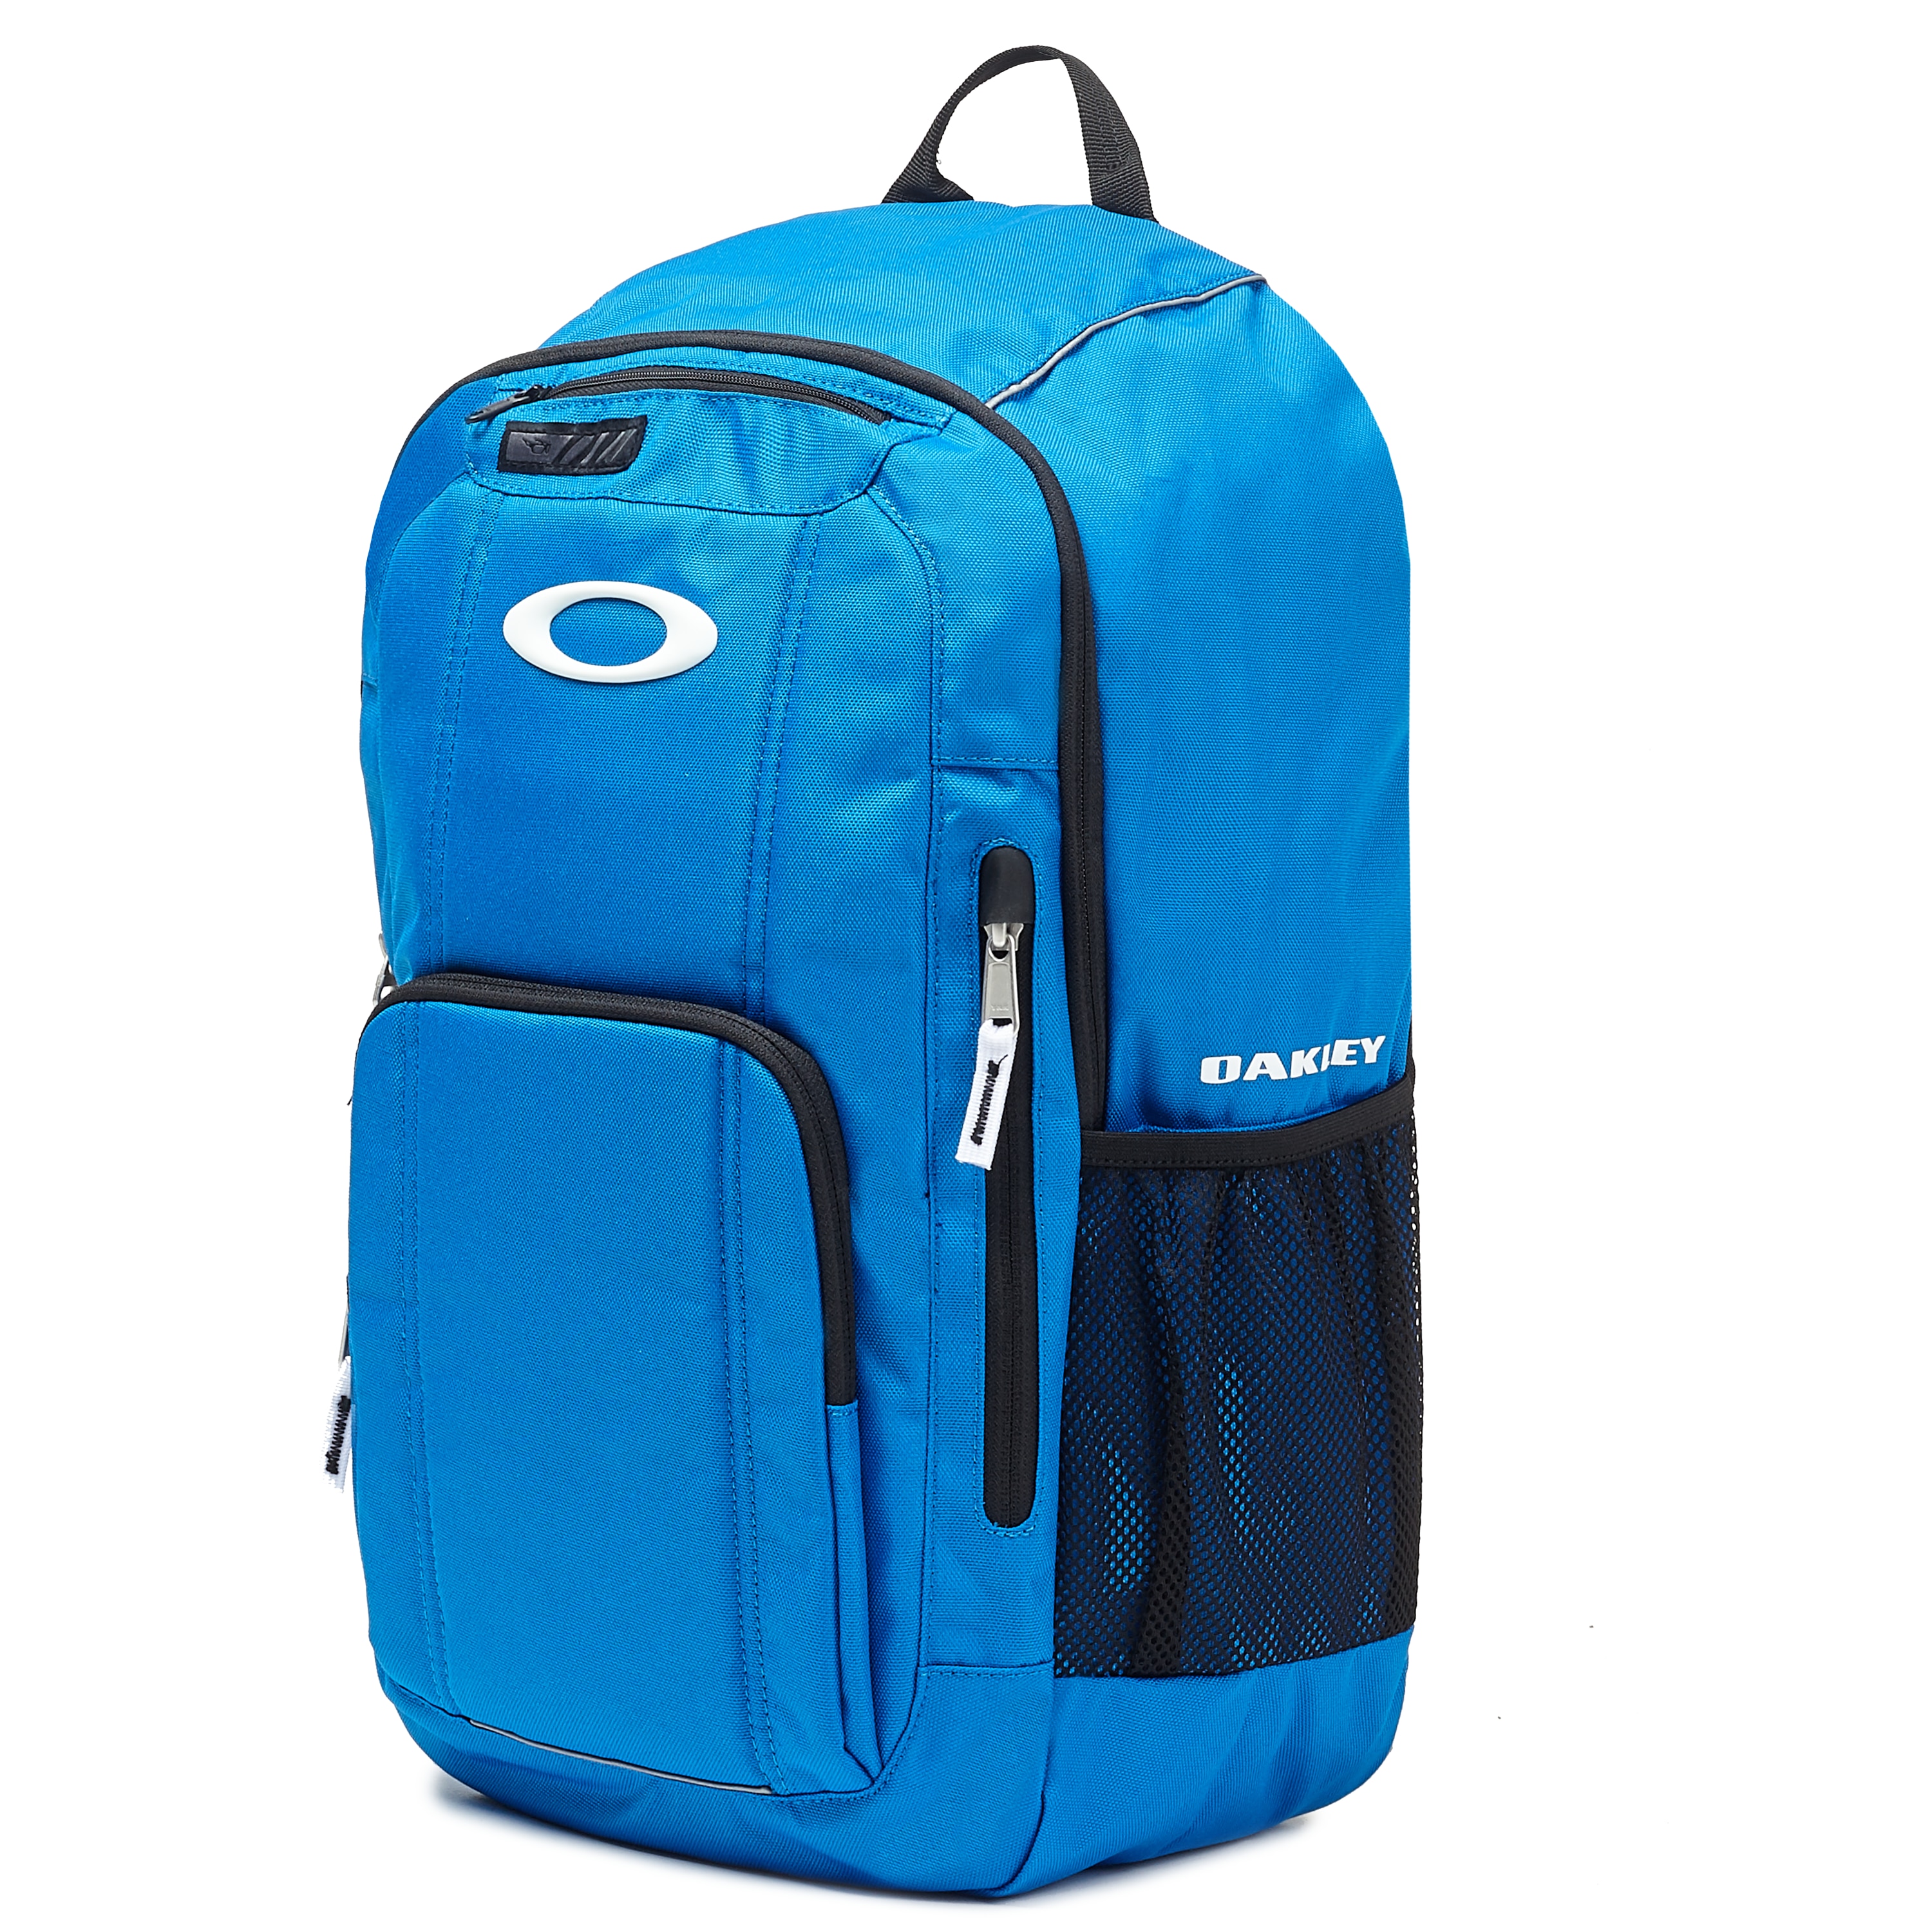 enduro 25l 2.0 backpack